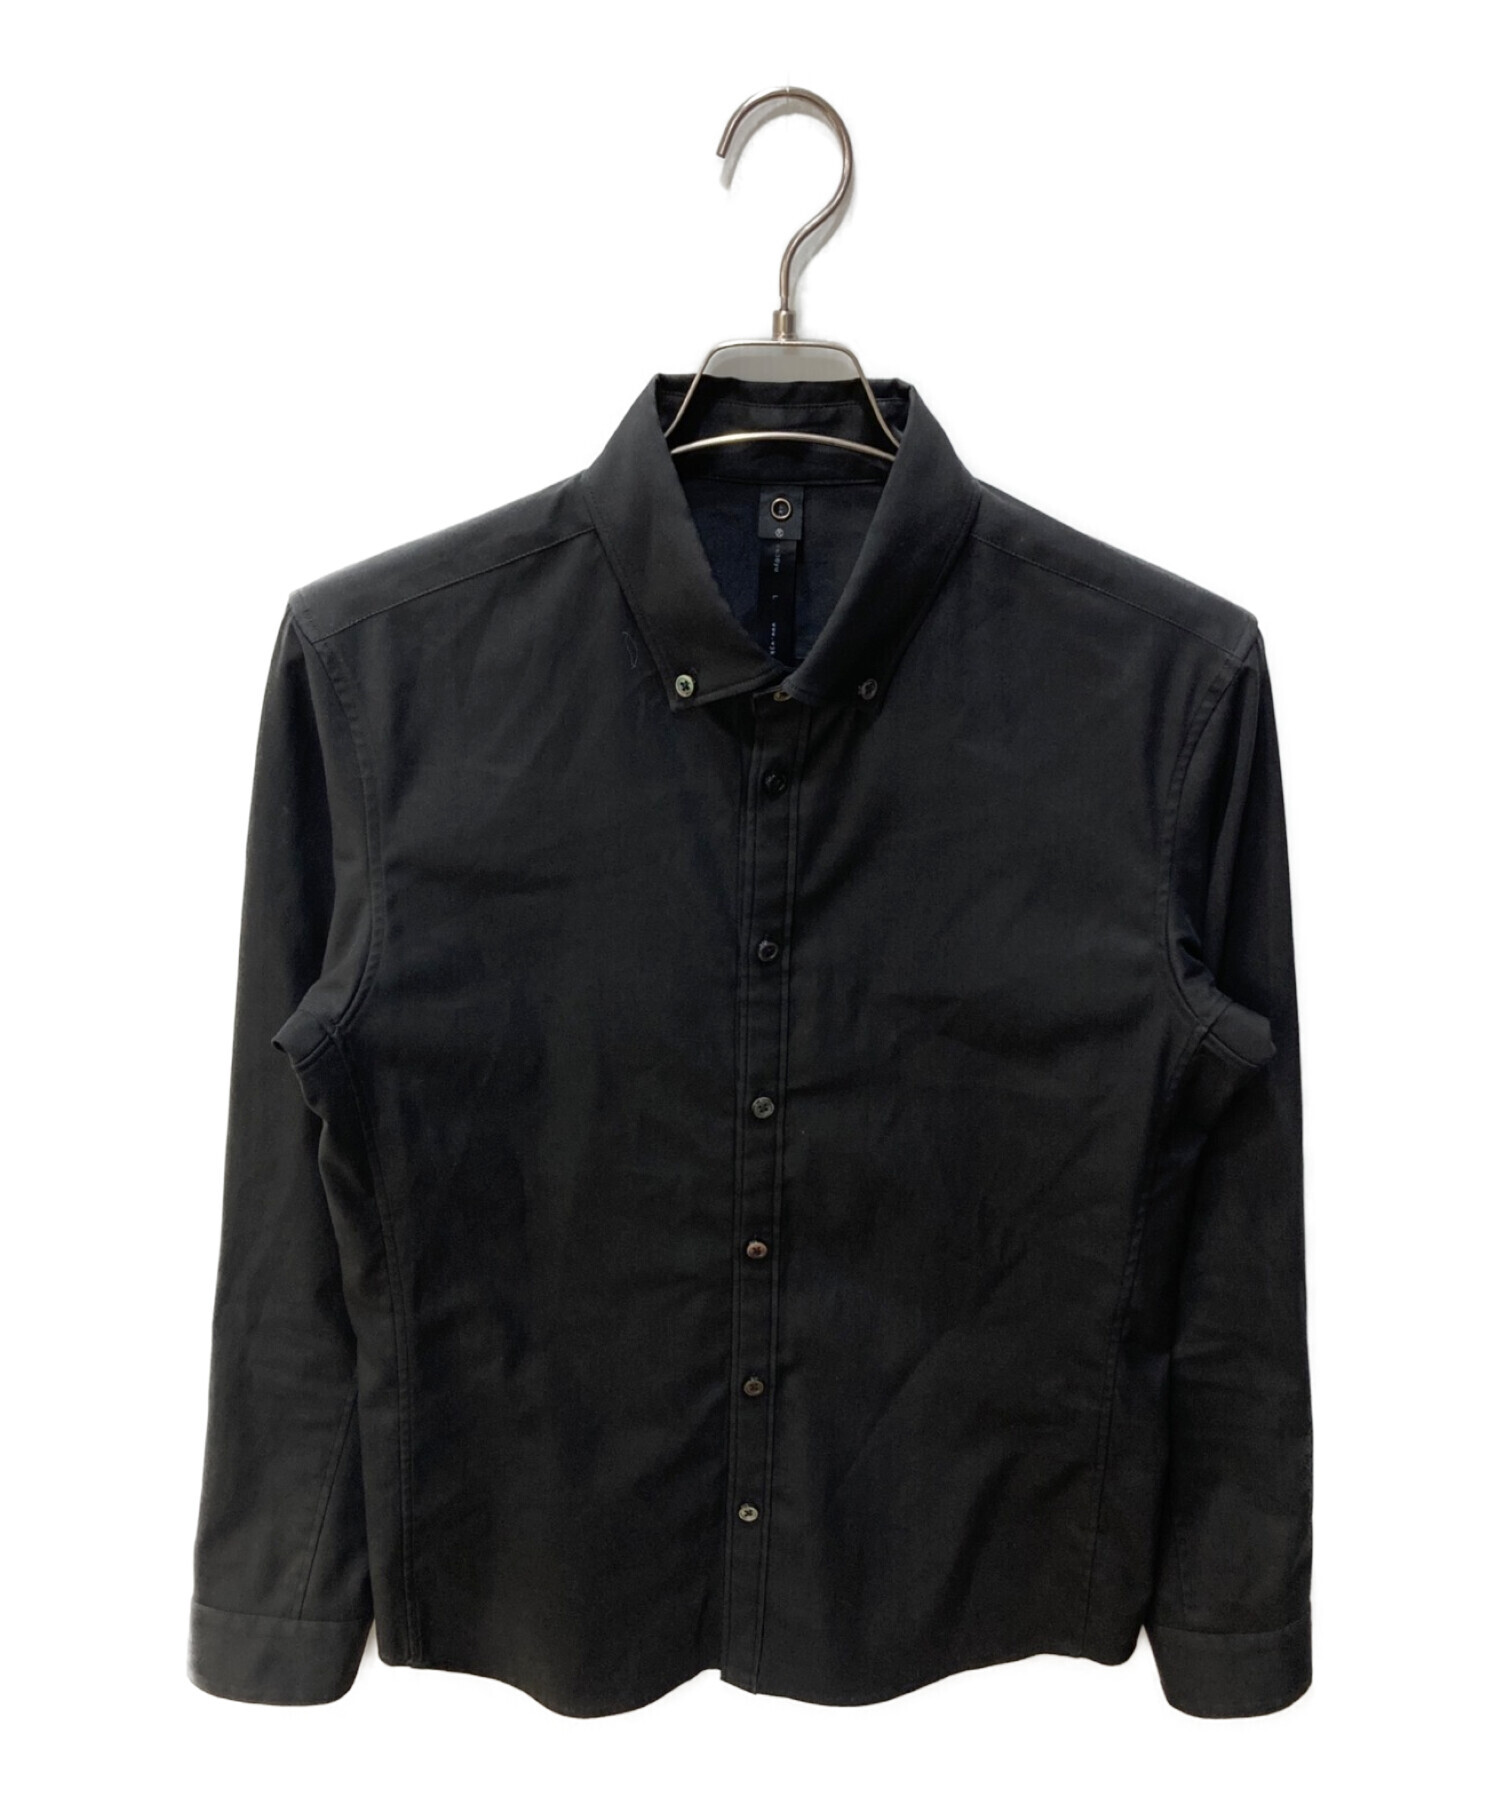 wjk (ダブルジェイケー) B.D shirt ボタンダウンシャツ ブラック サイズ:L